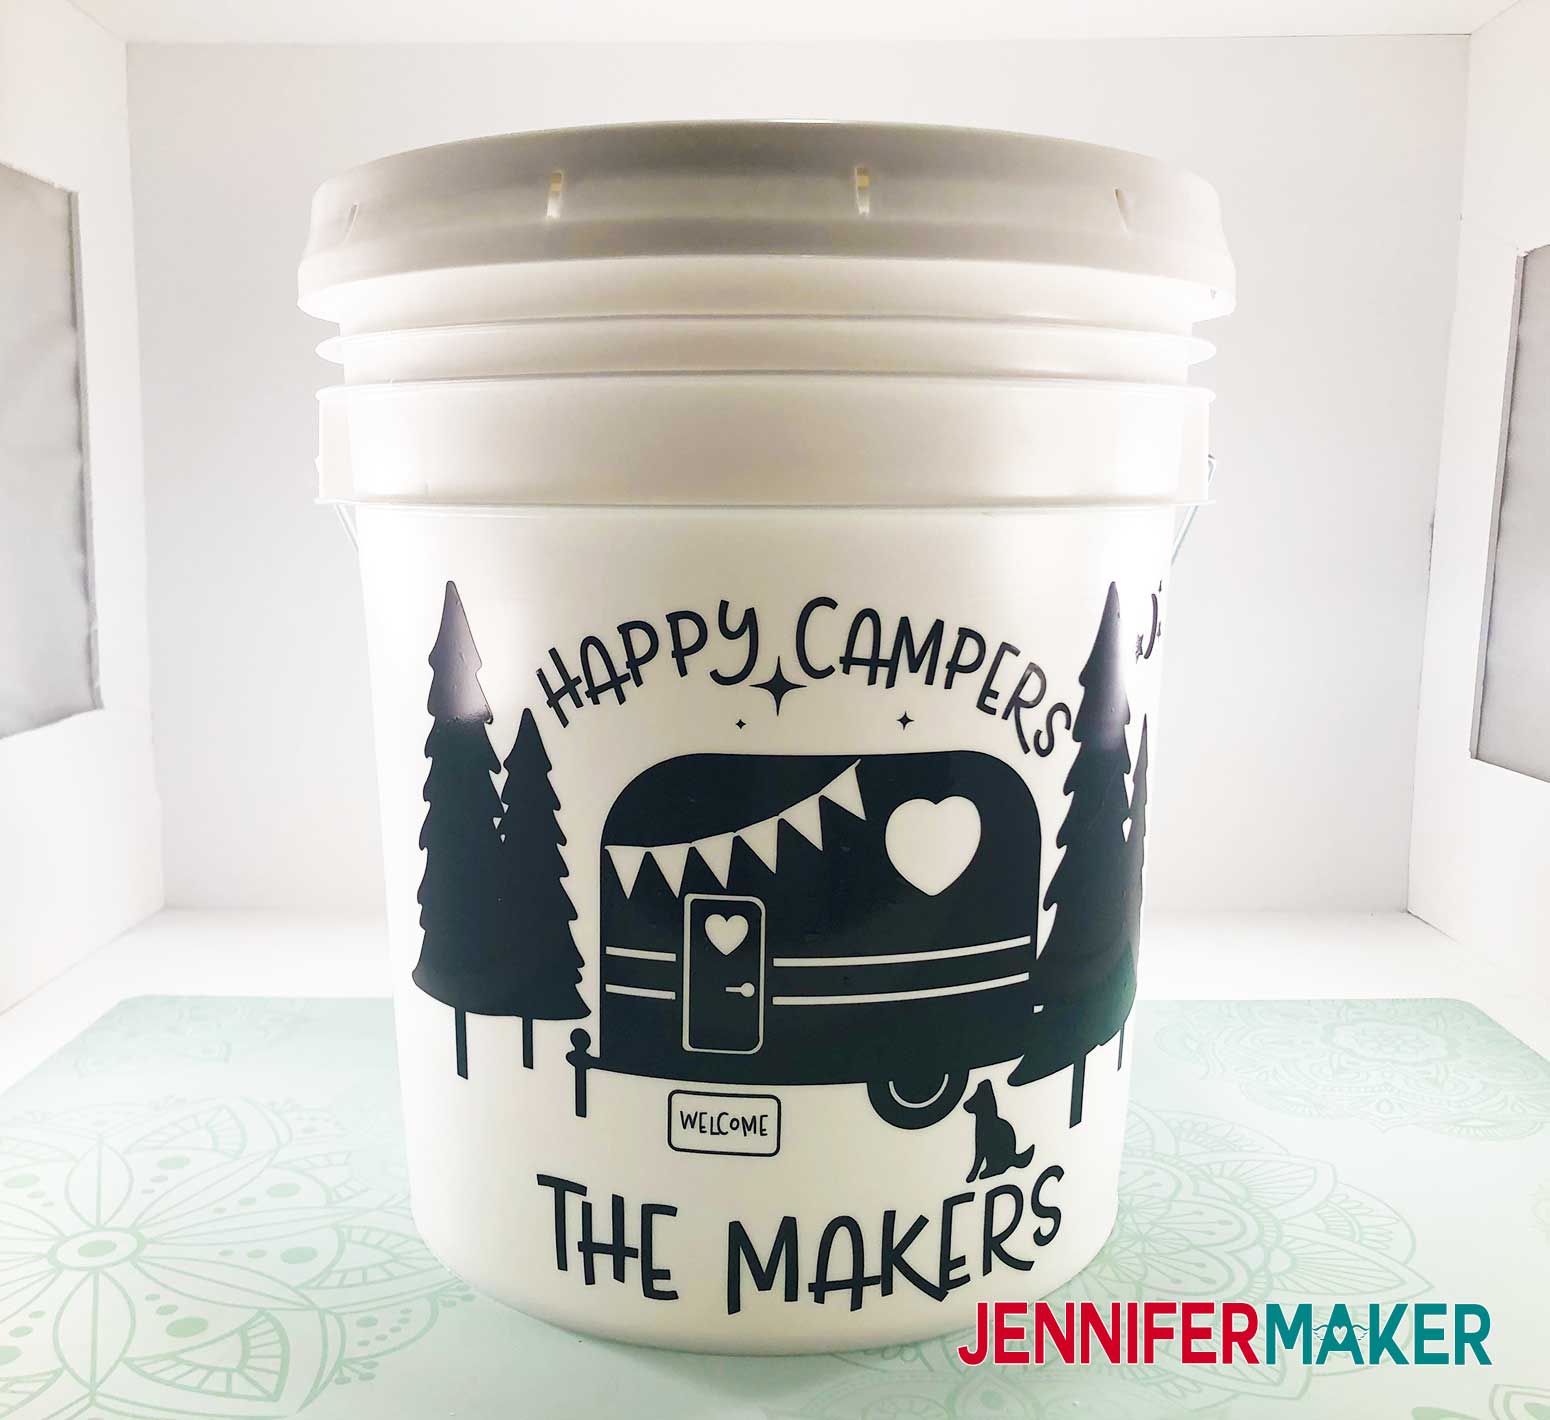 https://jennifermaker.com/wp-content/uploads/Camping-Bucket-Jennifermaker-finished.jpg